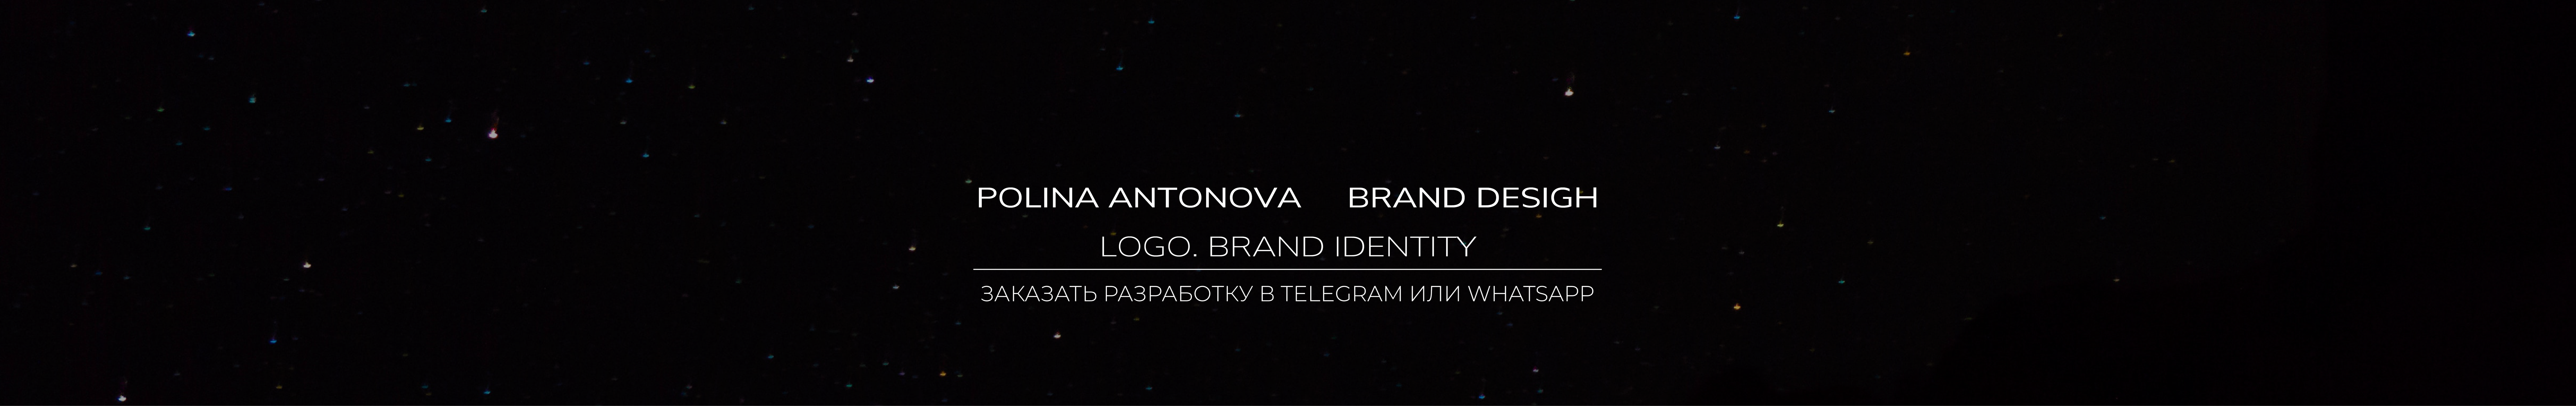 Polina Antonovas profilbanner